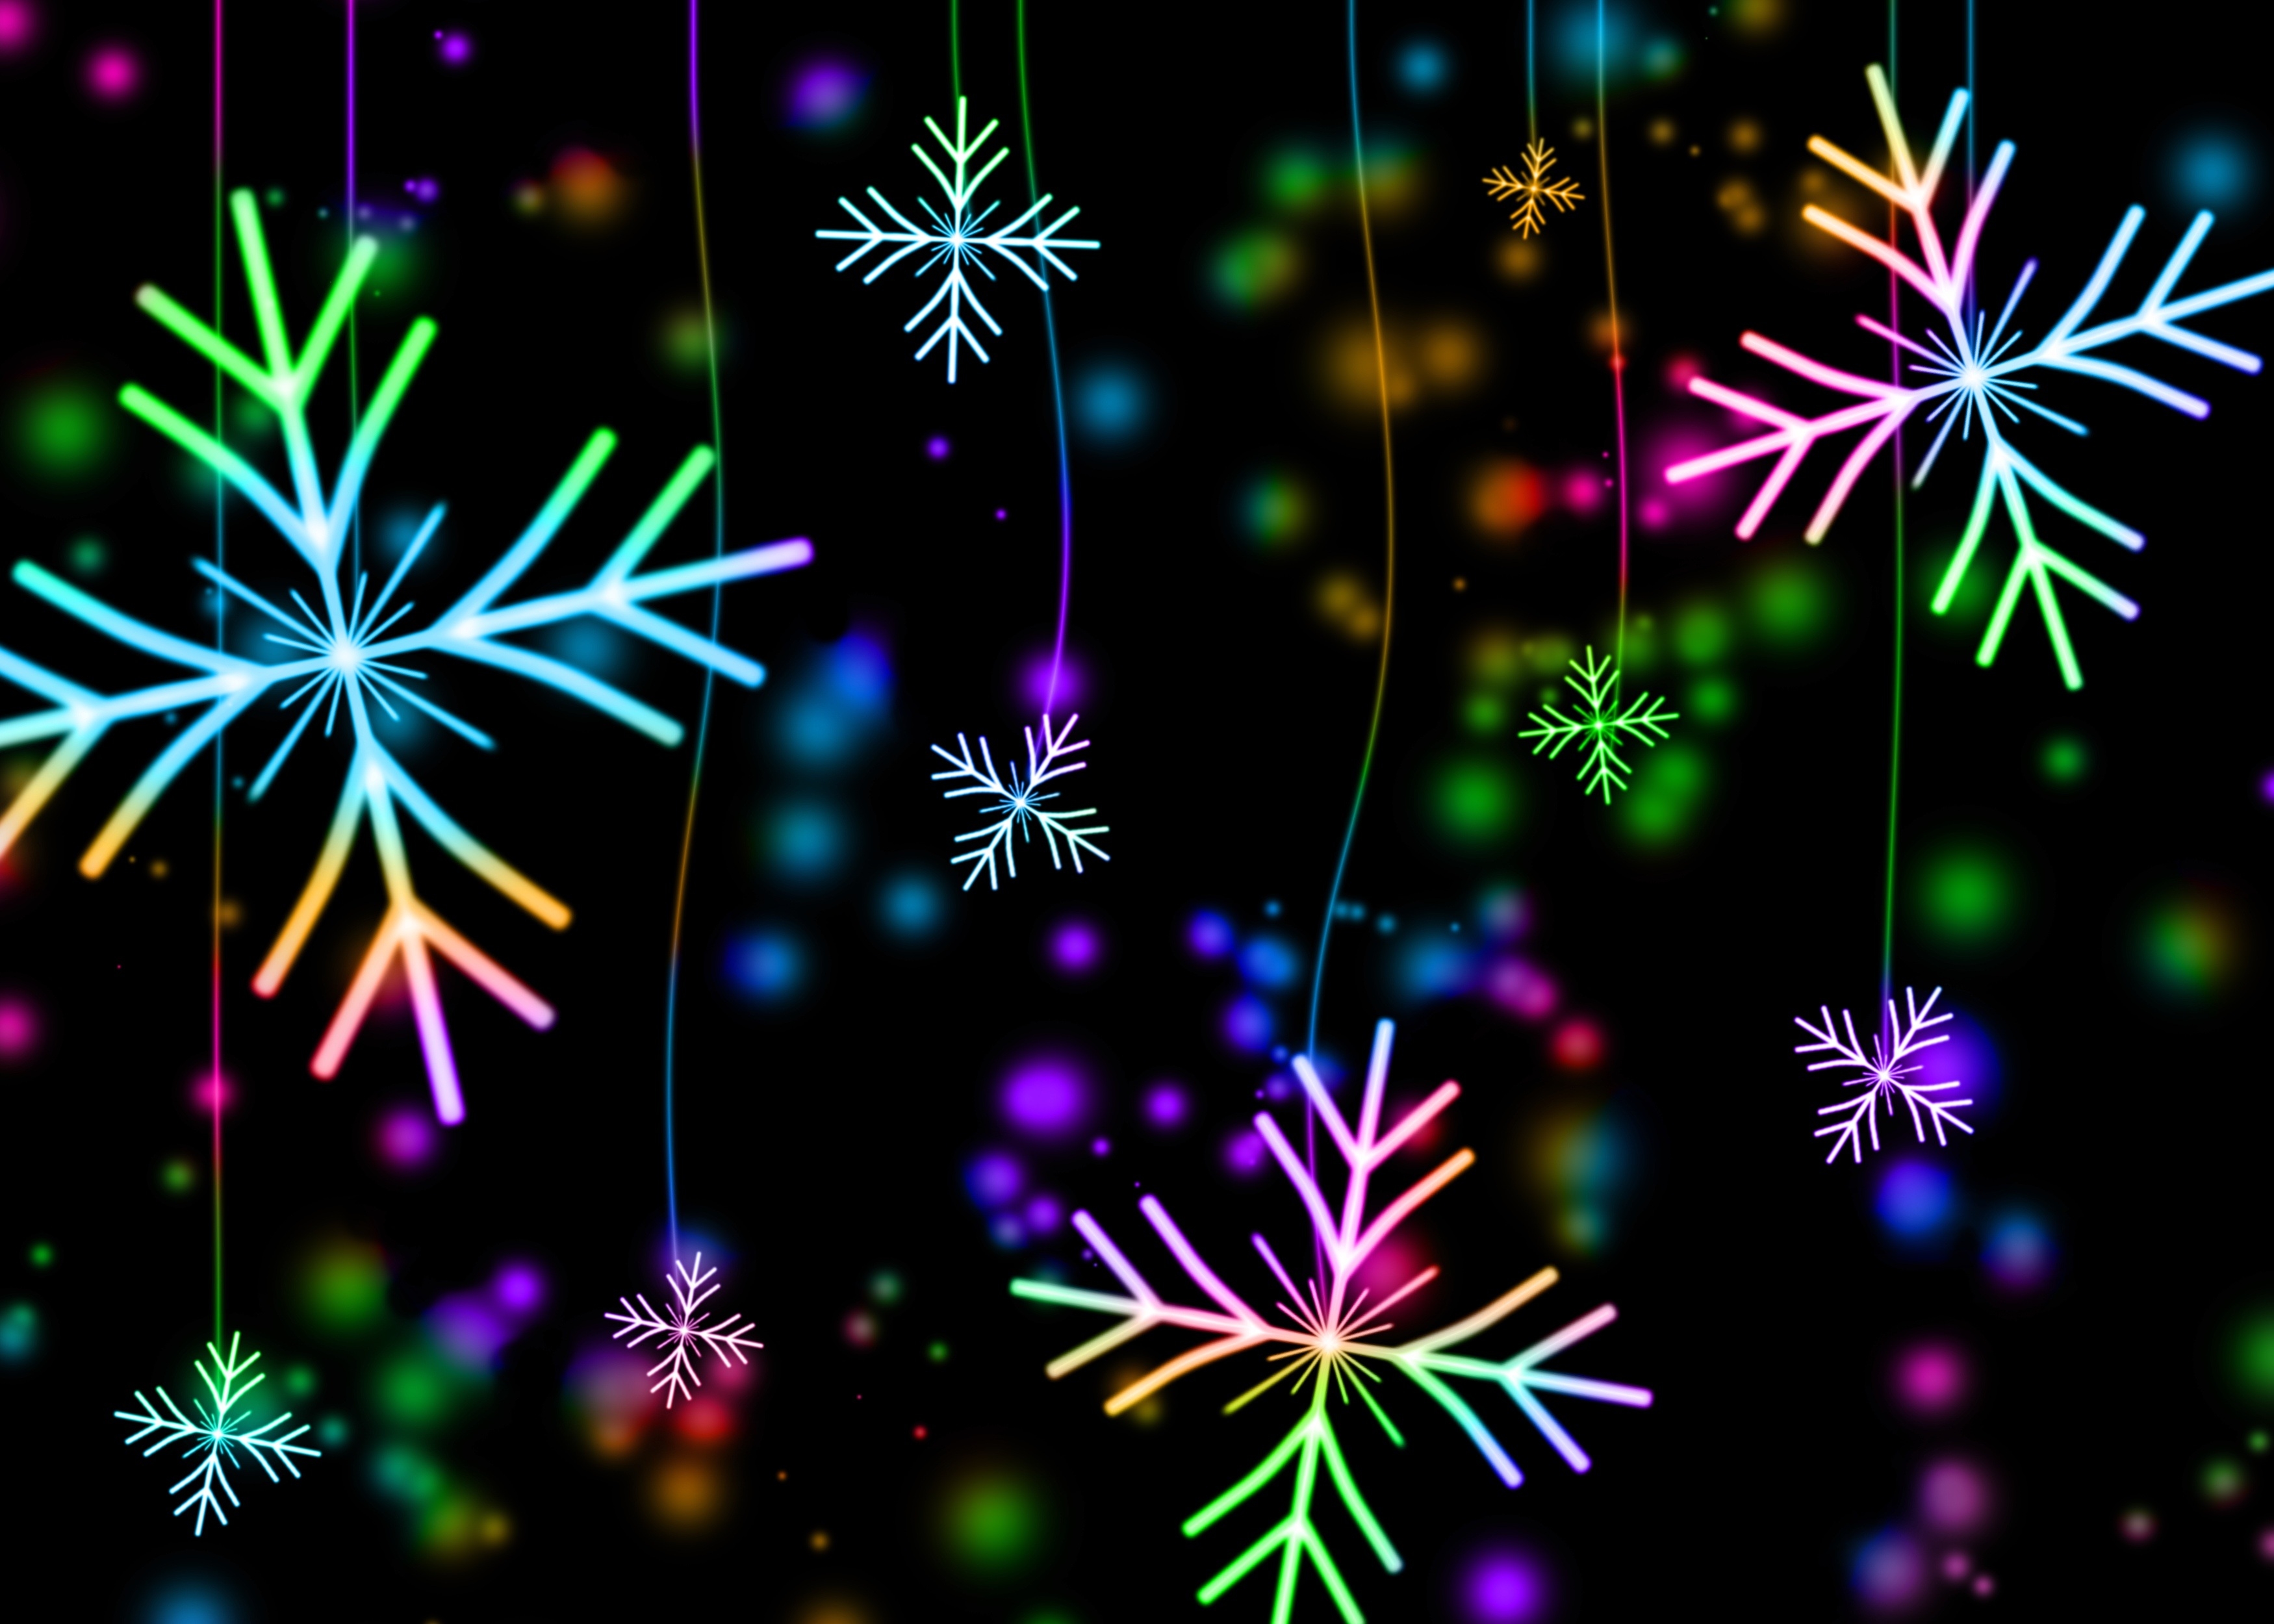 HD wallpaper, Snowflakes, Black Background, Navidad, Amoled, Bokeh, Colorful, Winter, Noel